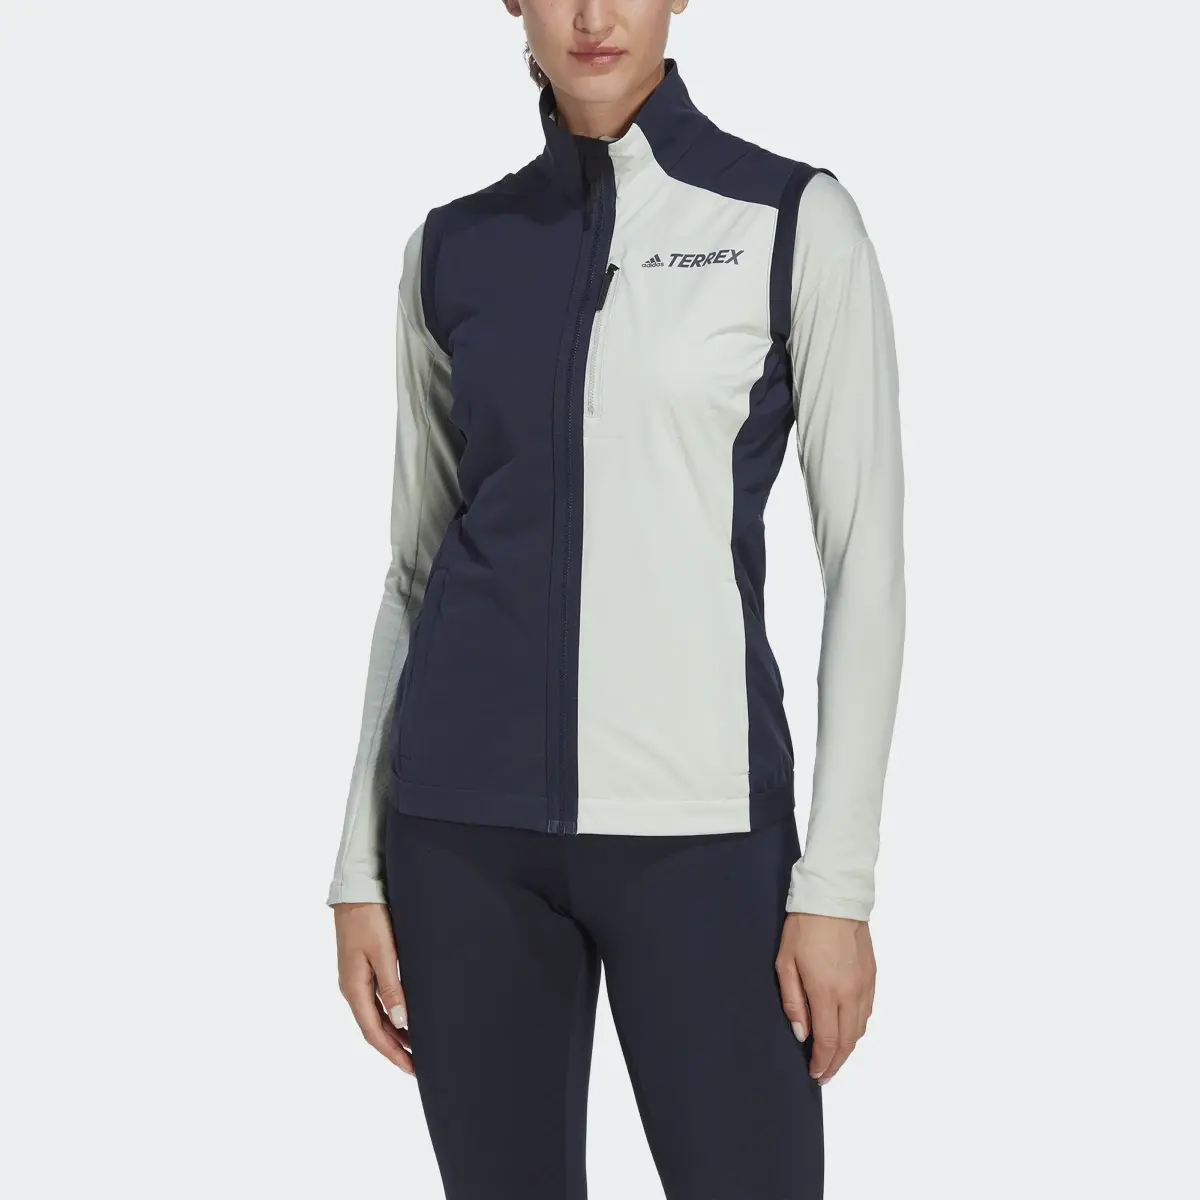 Adidas Terrex Xperior Cross-Country Ski Soft Shell Vest. 1